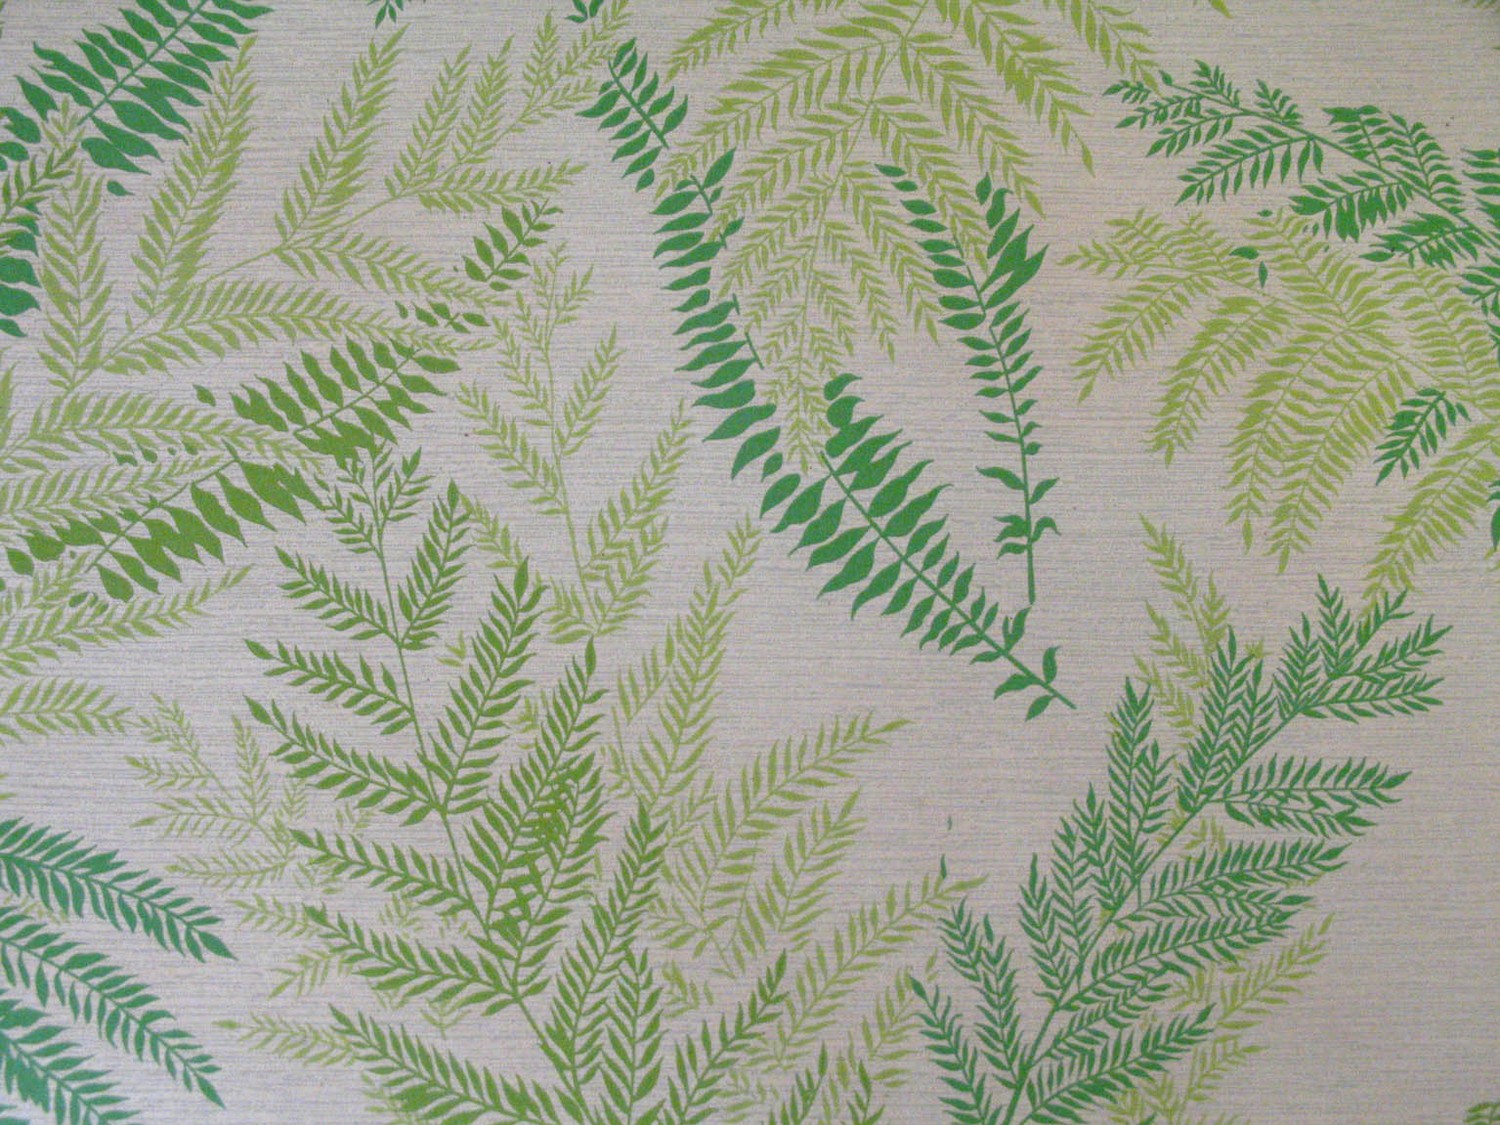 Vintage Fern Leaf Wallpaper Green Silhouette By Vintage73 On